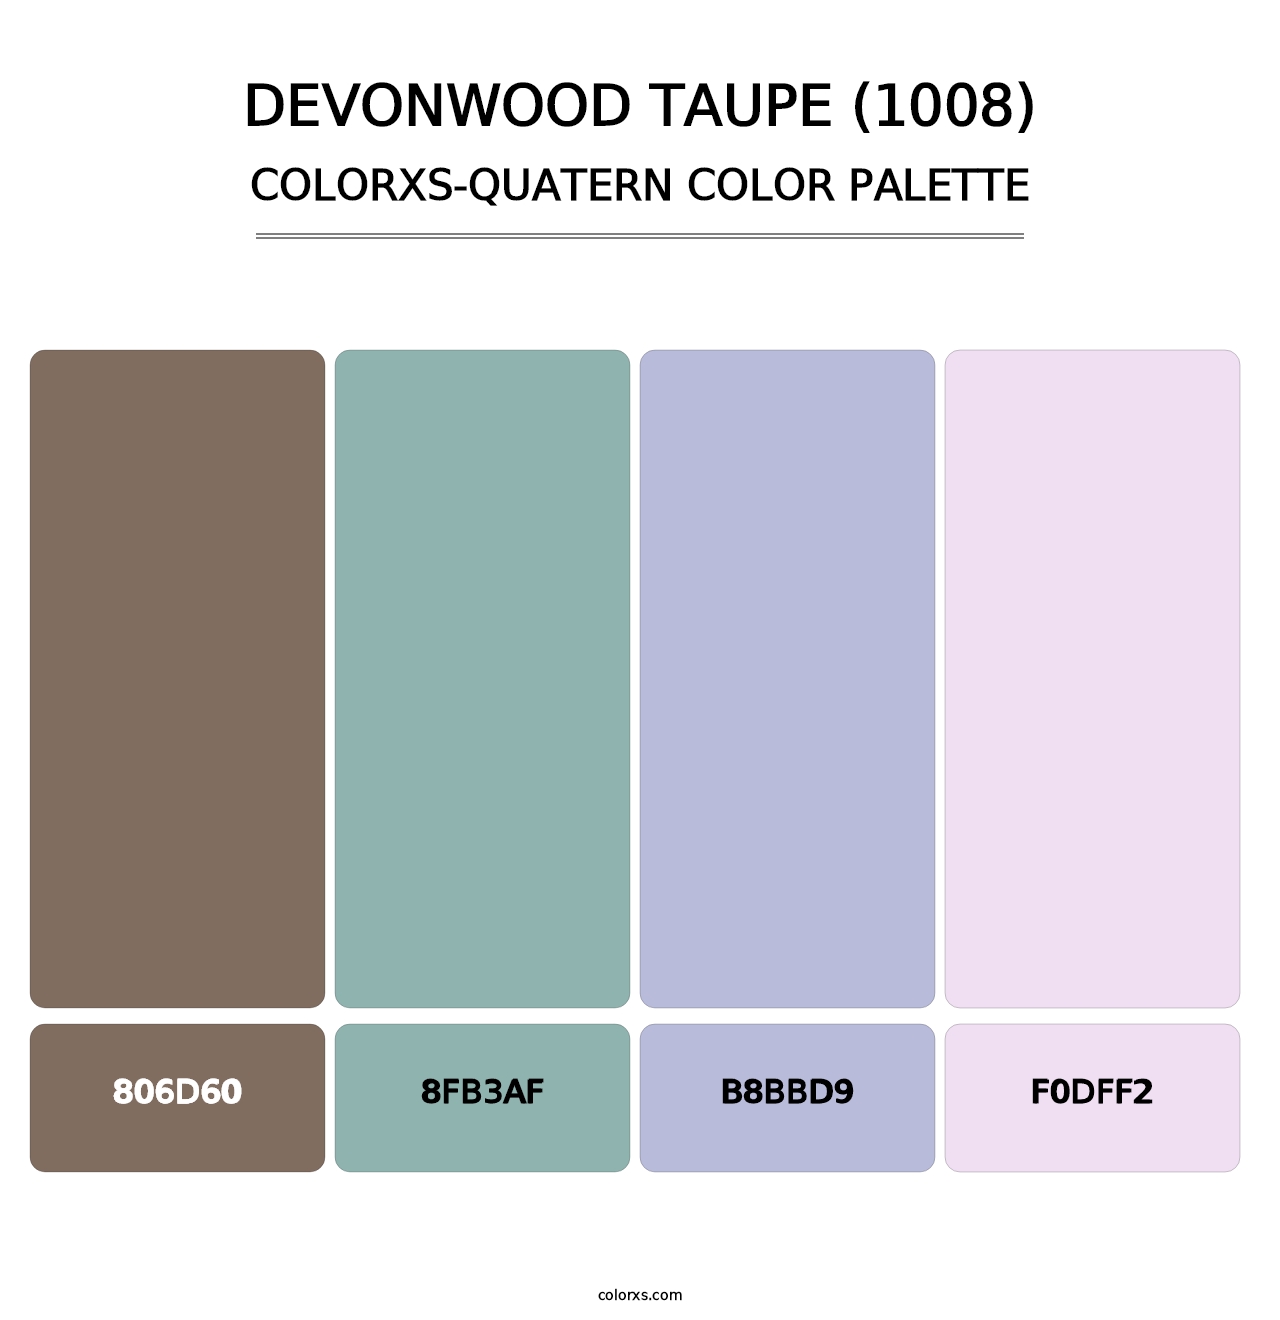 Devonwood Taupe (1008) - Colorxs Quatern Palette